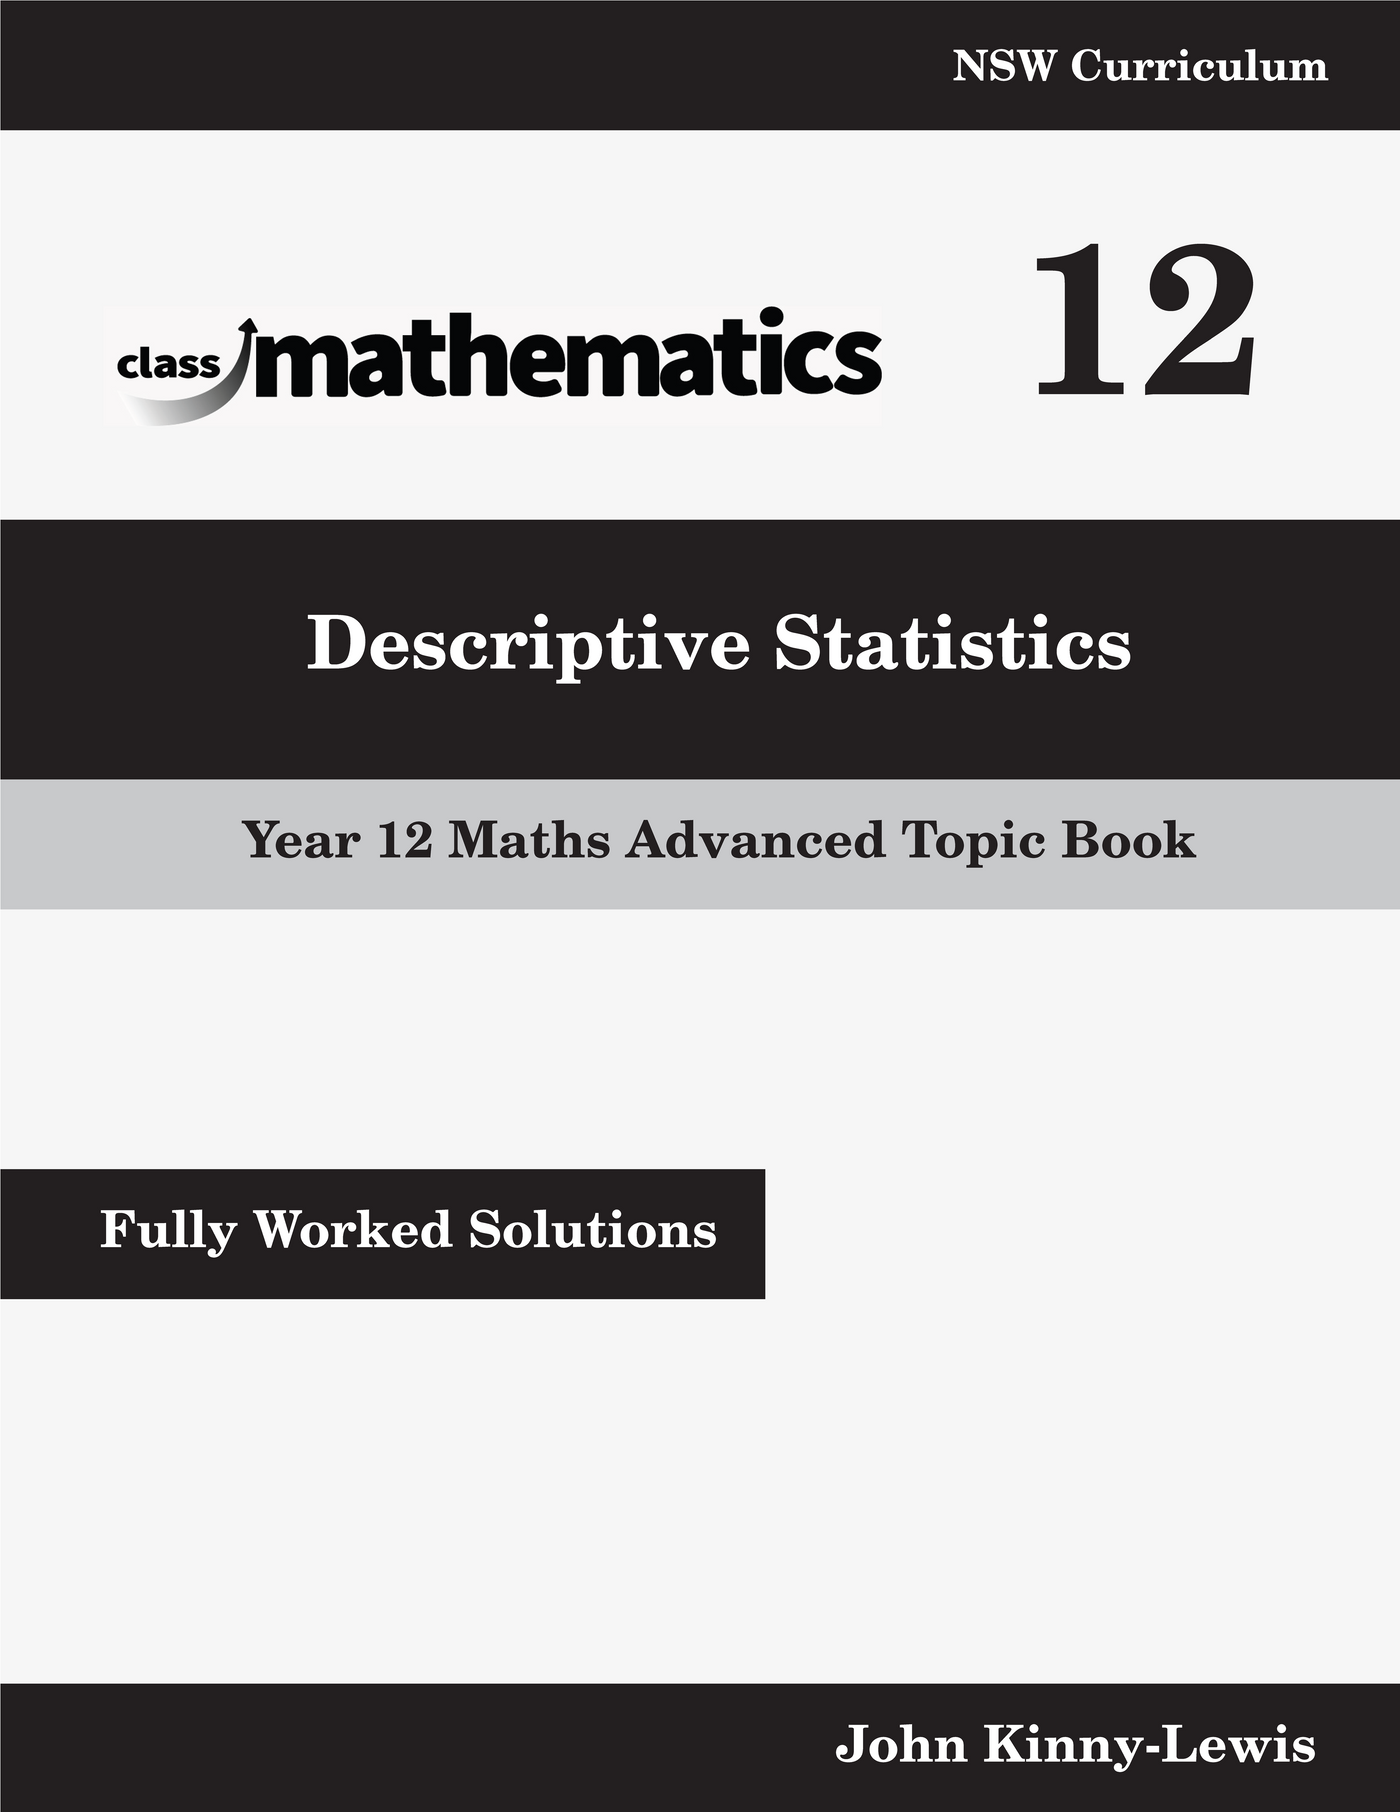 NSW Year 12 Maths Advanced - Descriptive Statistics